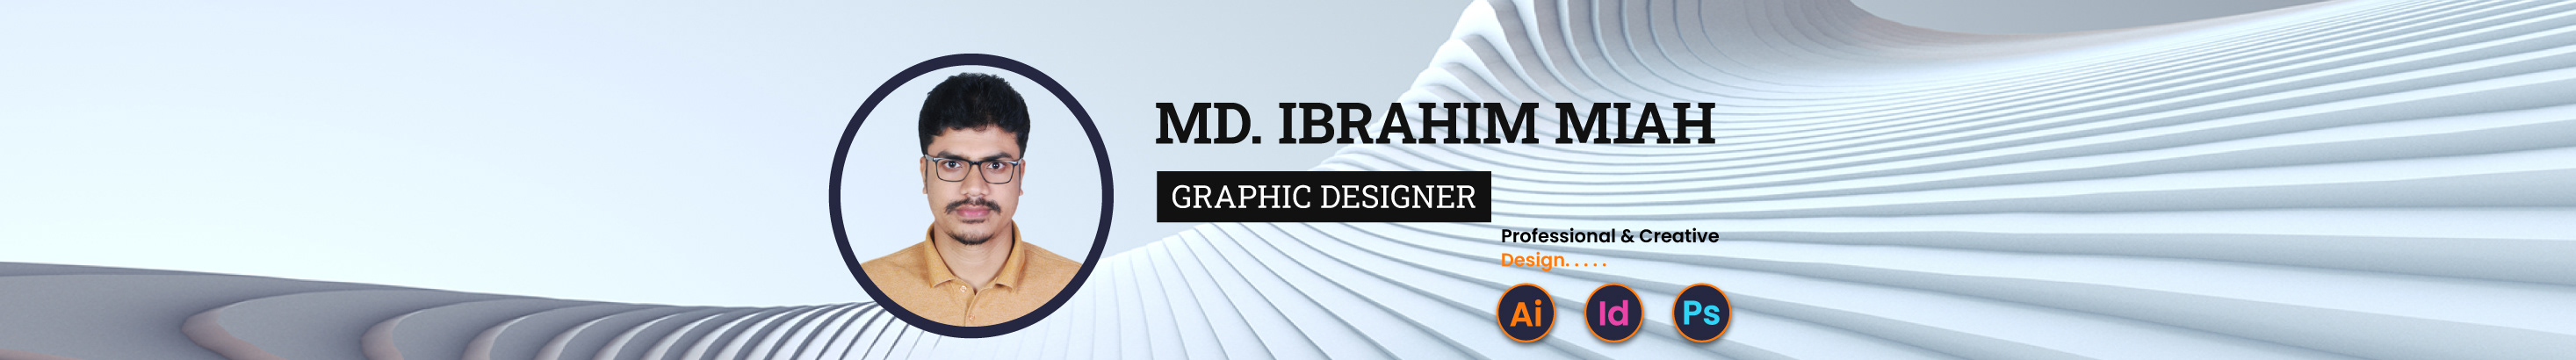 Baner profilu użytkownika MD. IBRAHIM MIAH